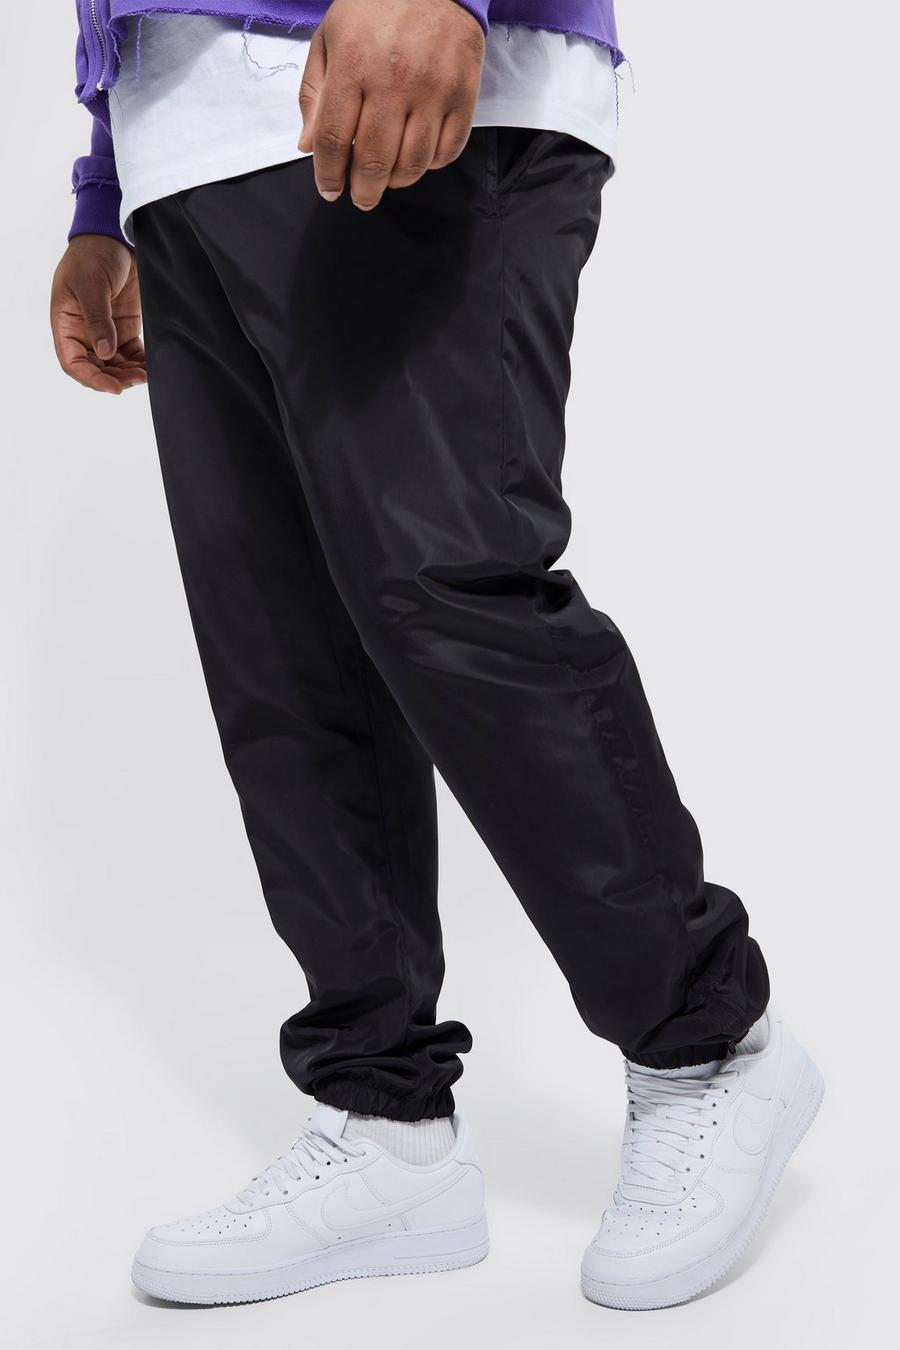 Pantaloni tuta Plus Size Slim Fit con fermacorde, Black negro image number 1